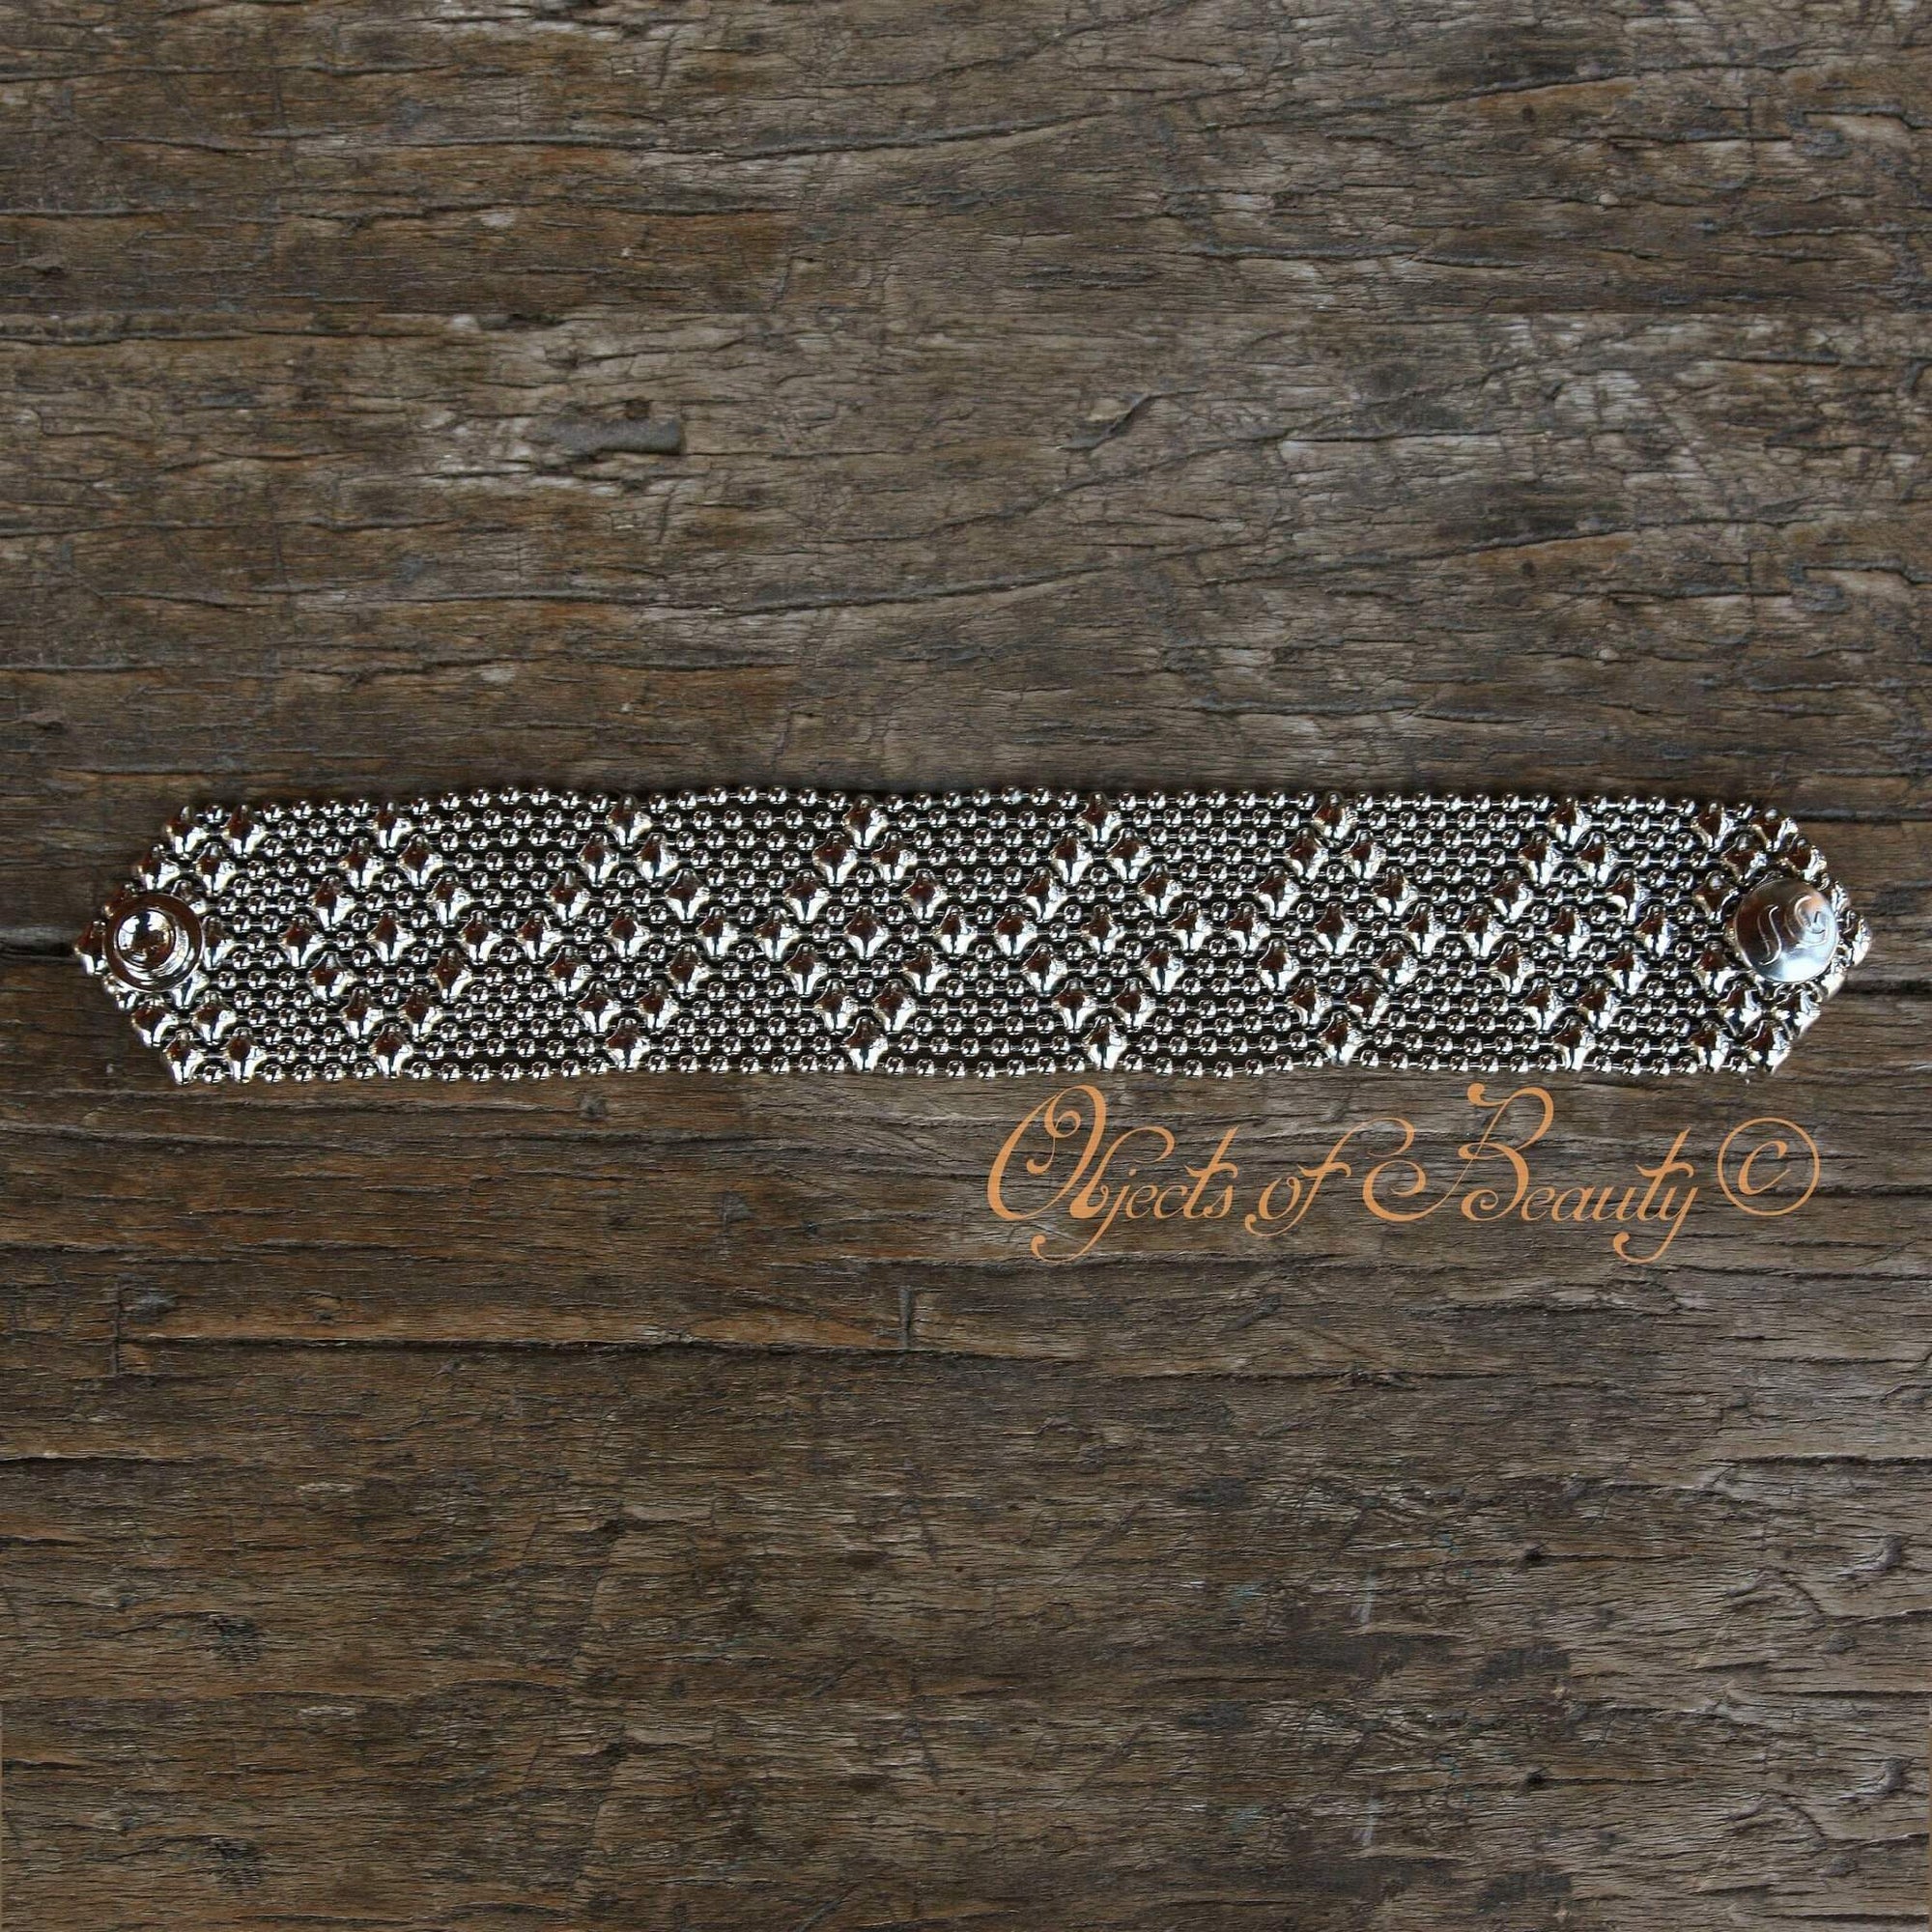 Anastacia SG Liquid Metal Bracelet Bracelets Sergio Gutierrez Liquid Metal Jewelry 